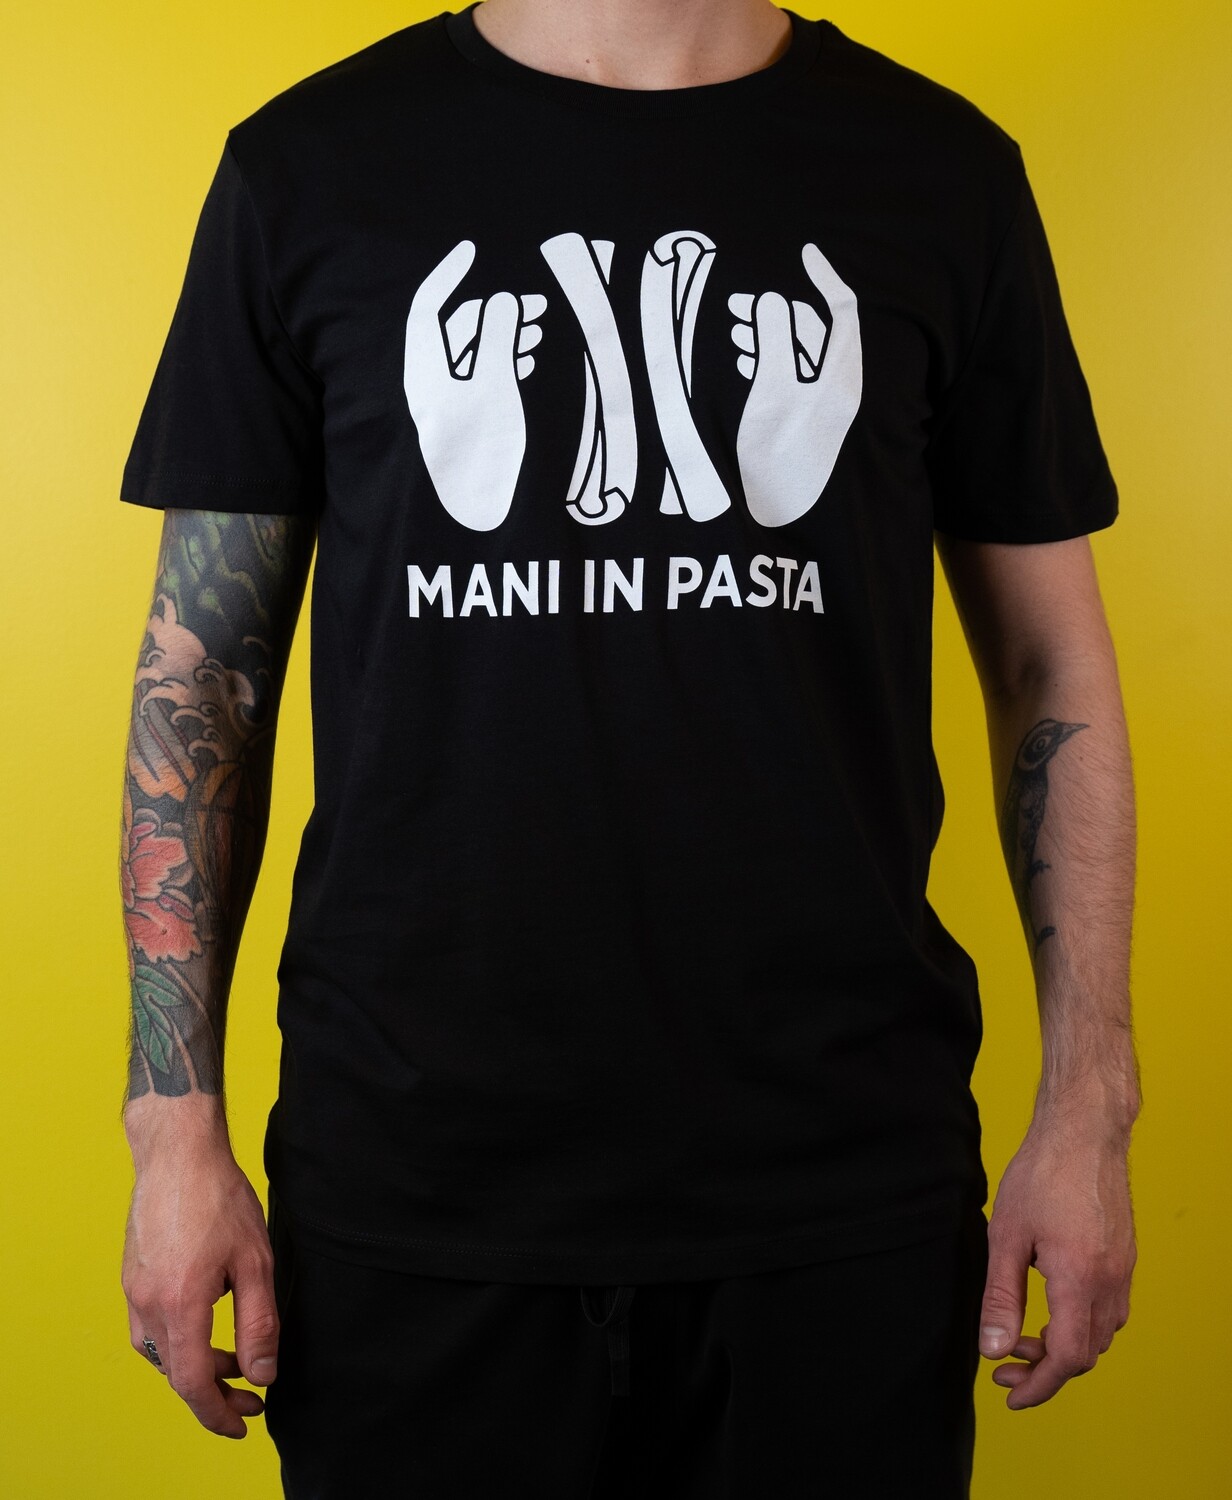 Mani in Pasta T-shirt black (size M)